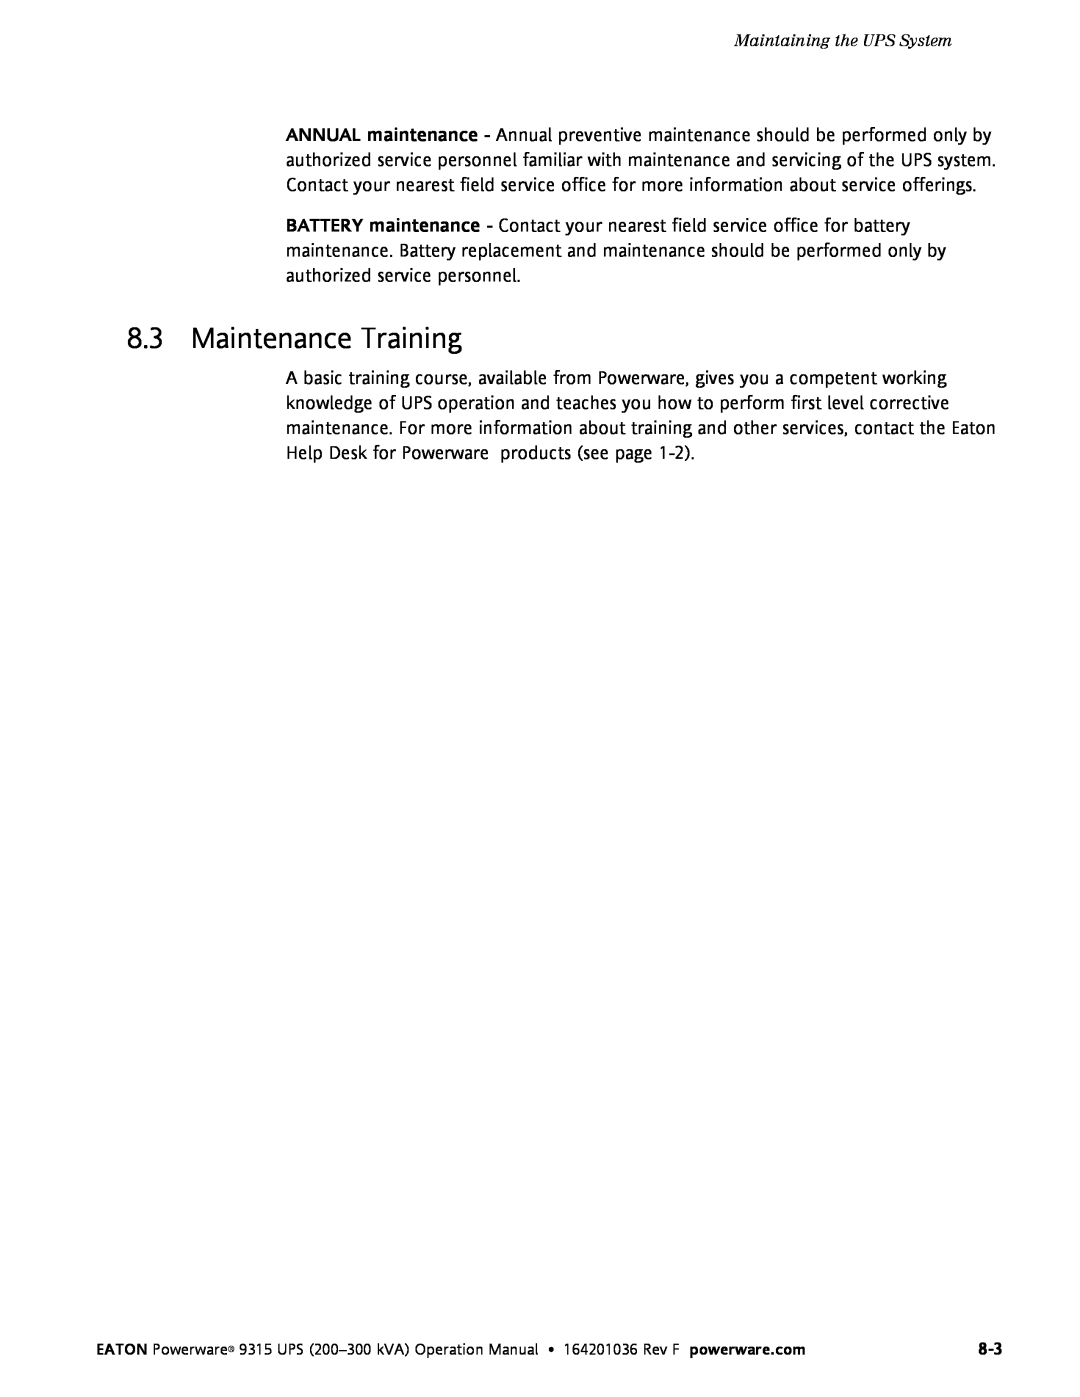 Eaton Electrical Powerware 9315 operation manual Maintenance Training 